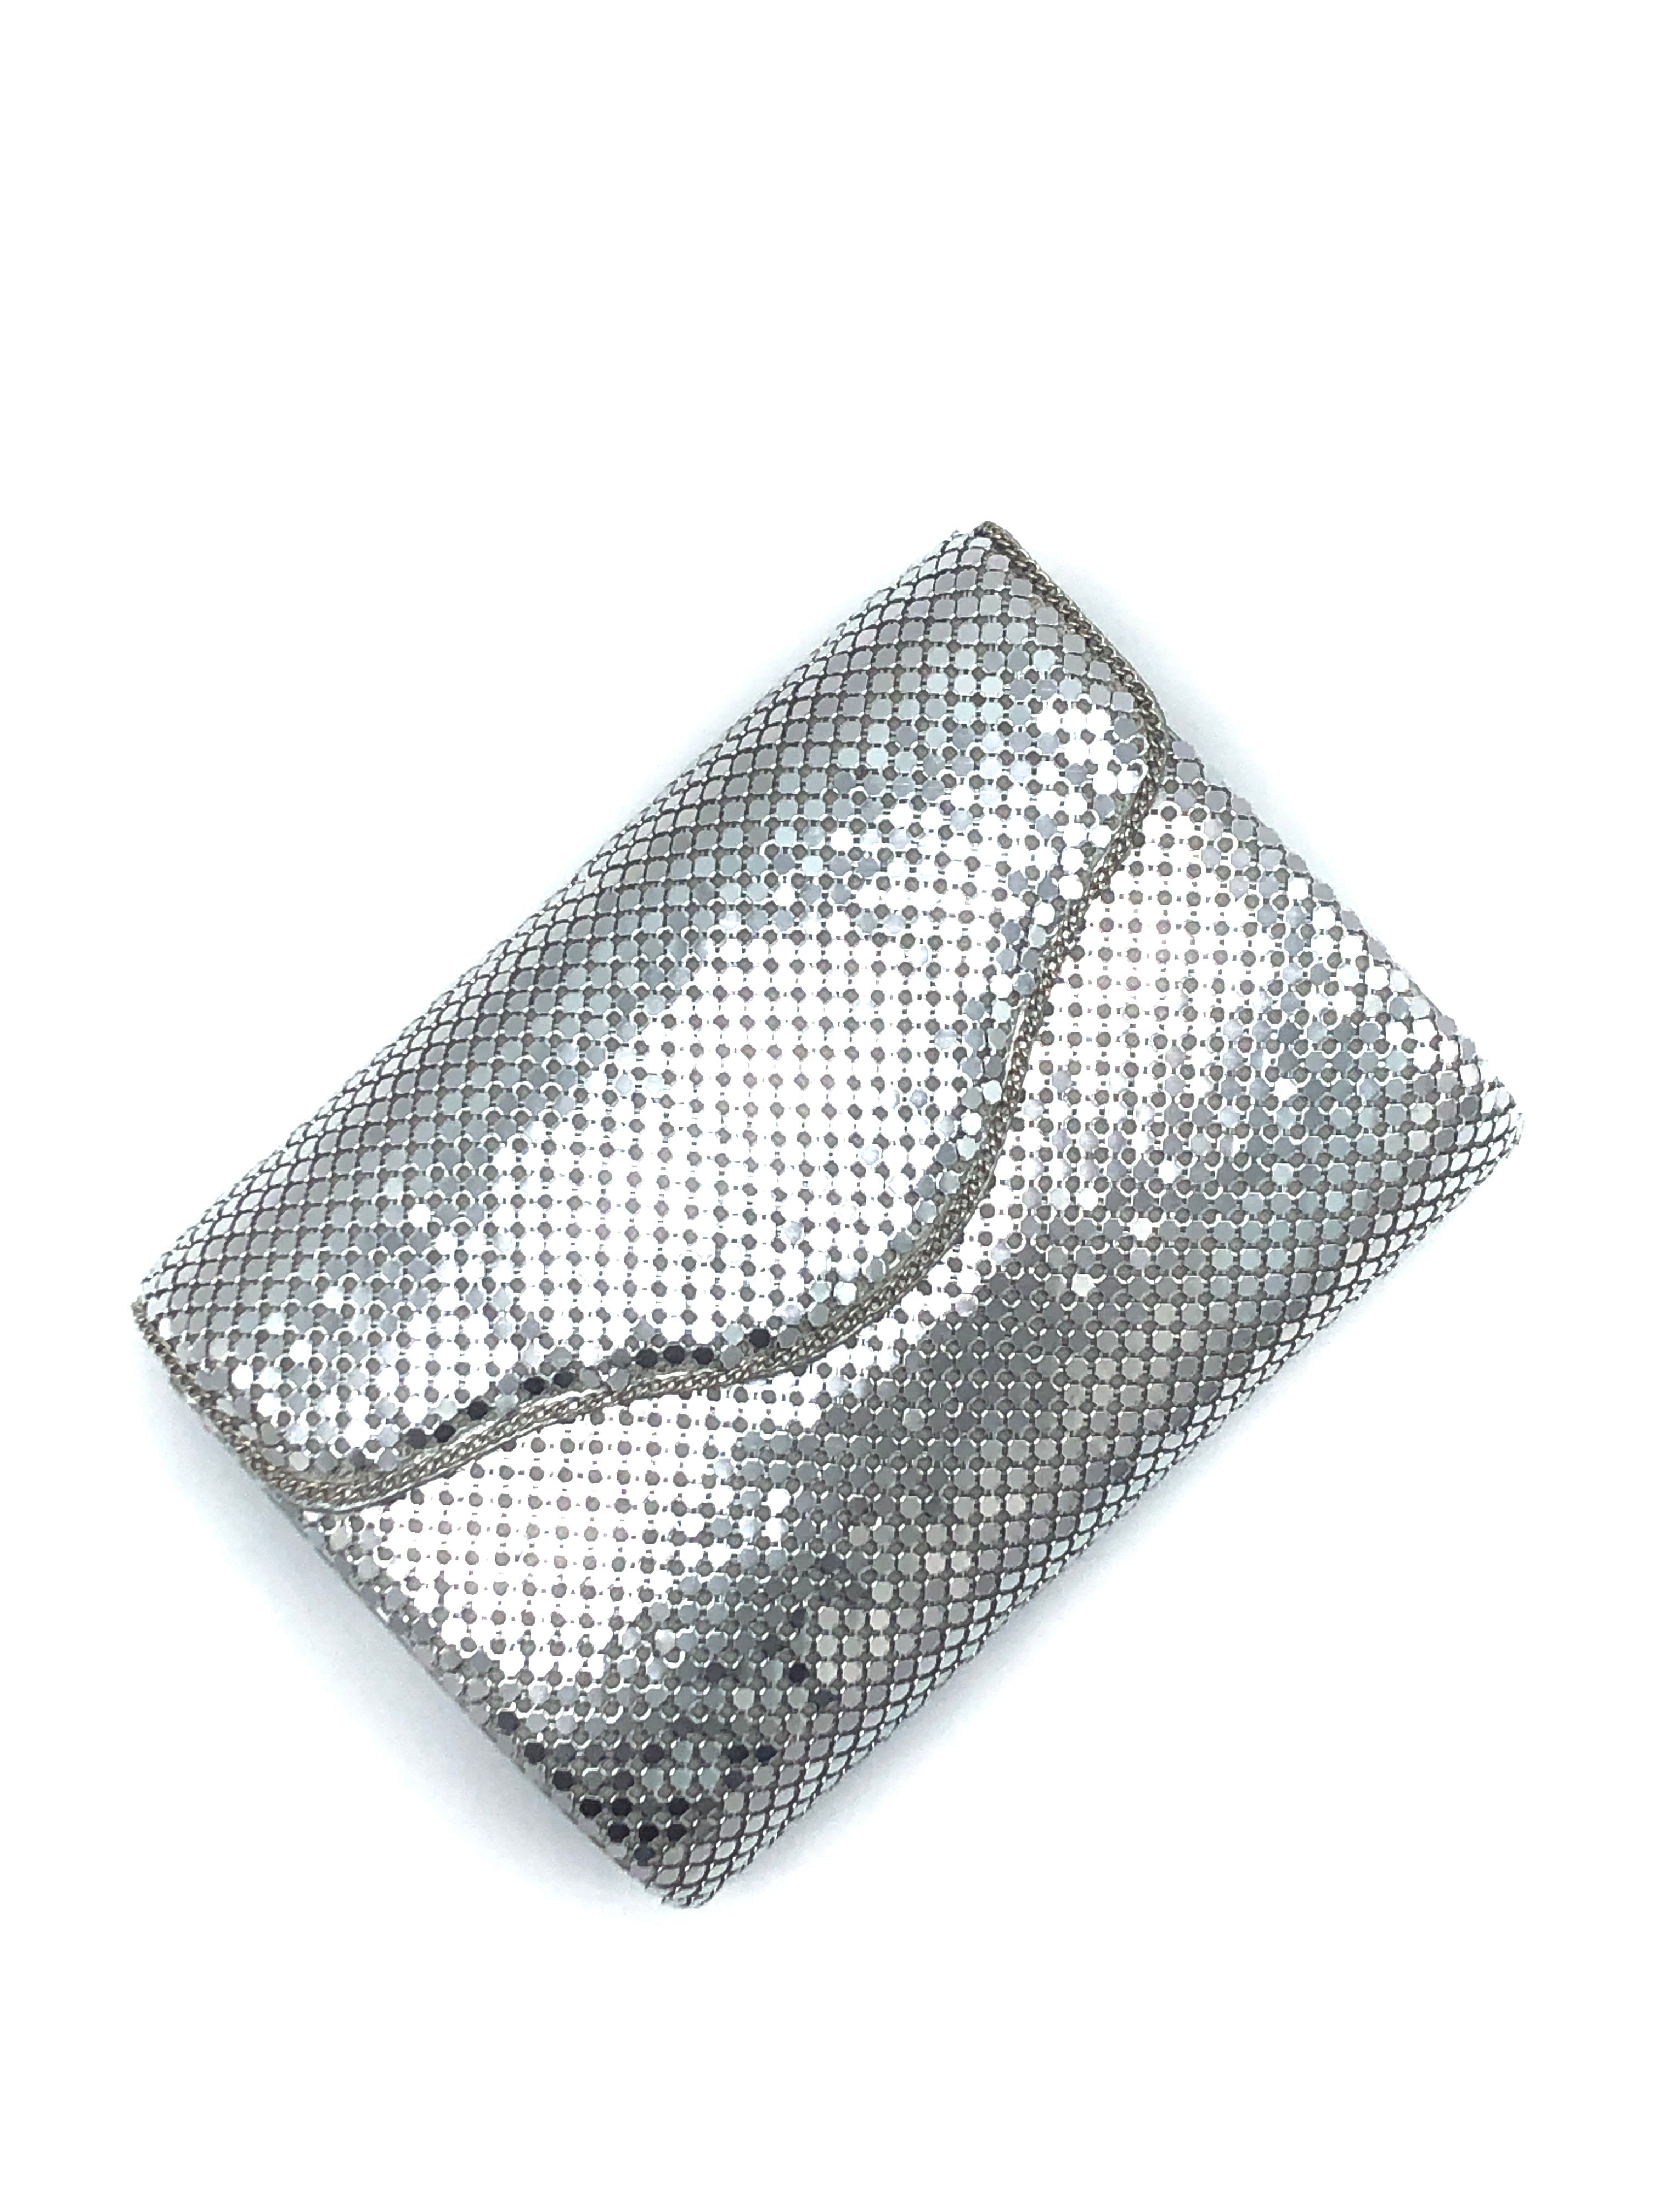 Metal mesh clutch purse bag, antique, nice - collectibles - by owner - sale  - craigslist